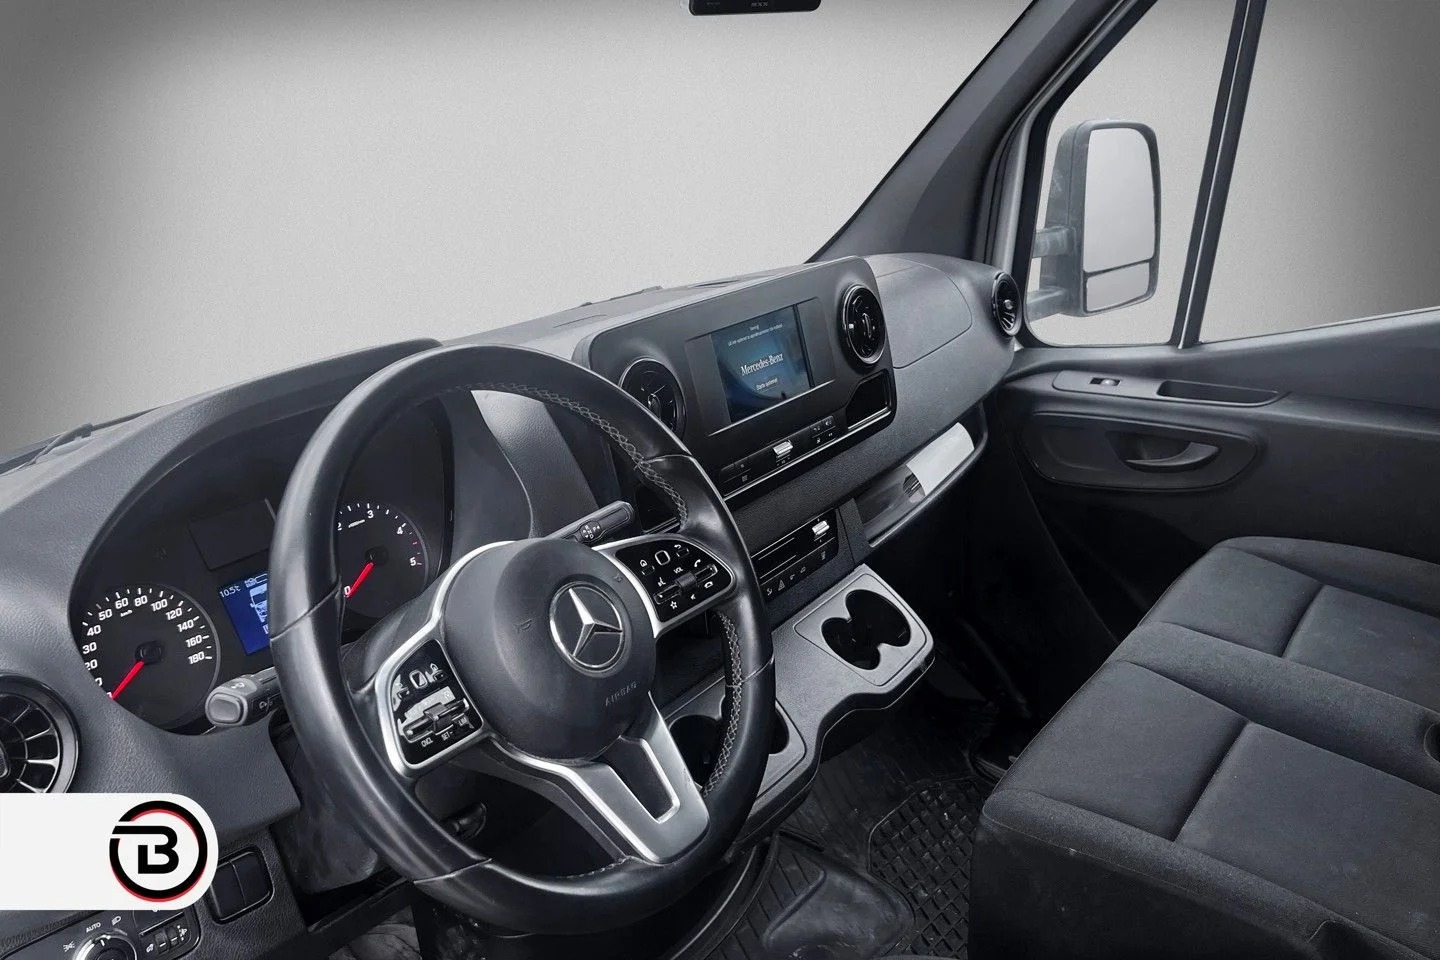 Mercedes-Benz Sprinter 316 CDI Chassi 7G-Tronic Plus, 163hk, 2019